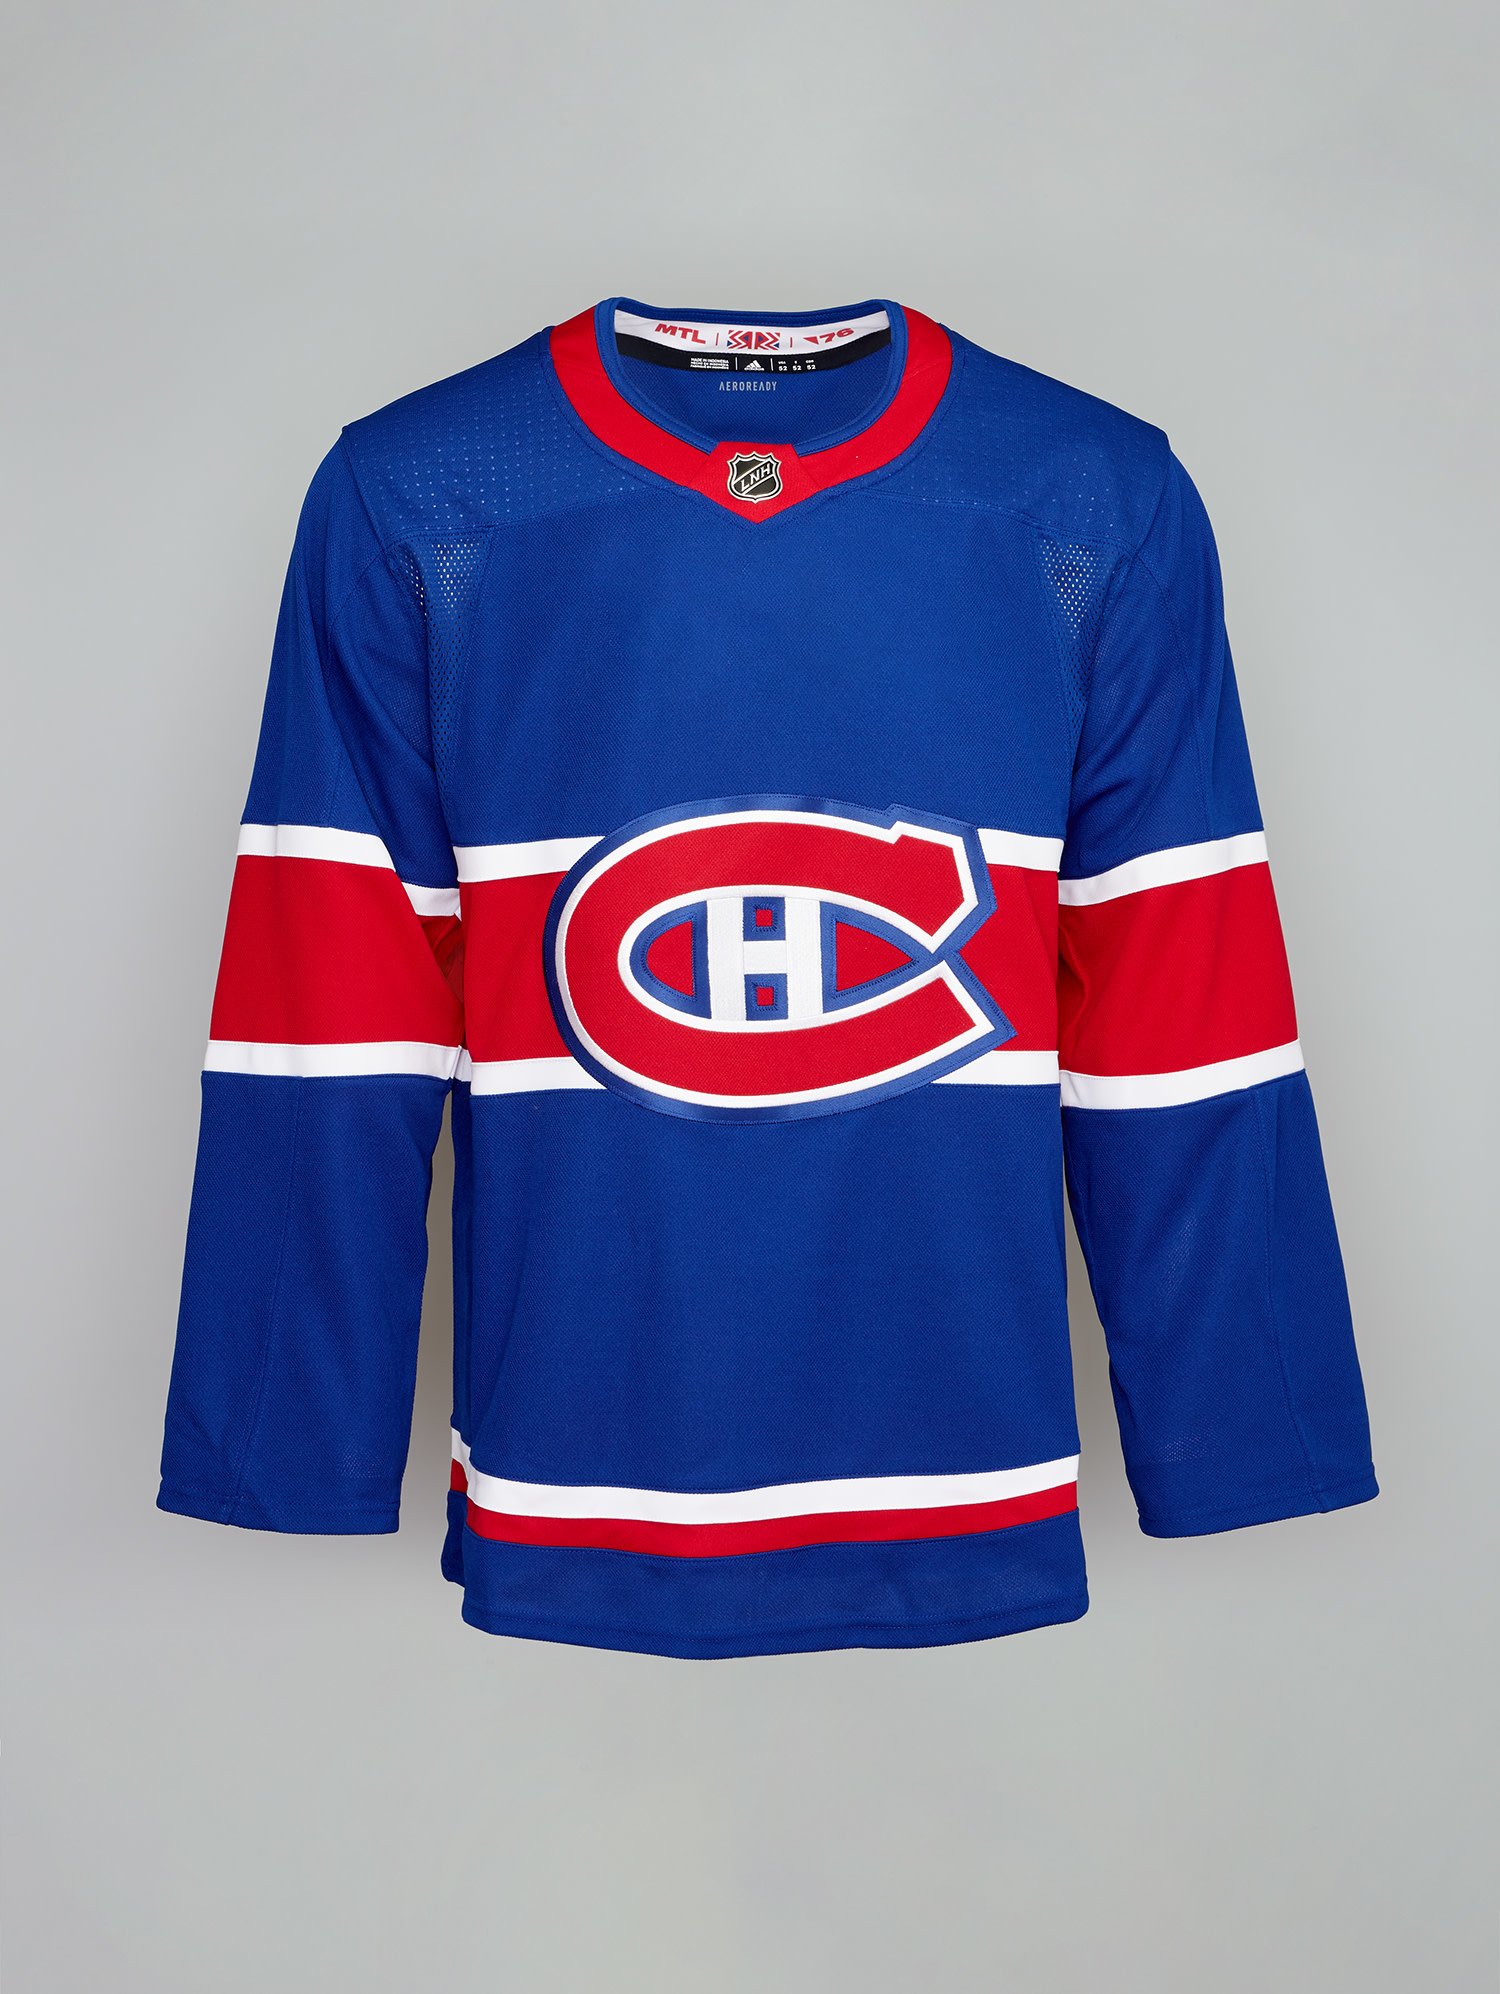 NHL Montreal Canadiens Reverse Retro Jersey